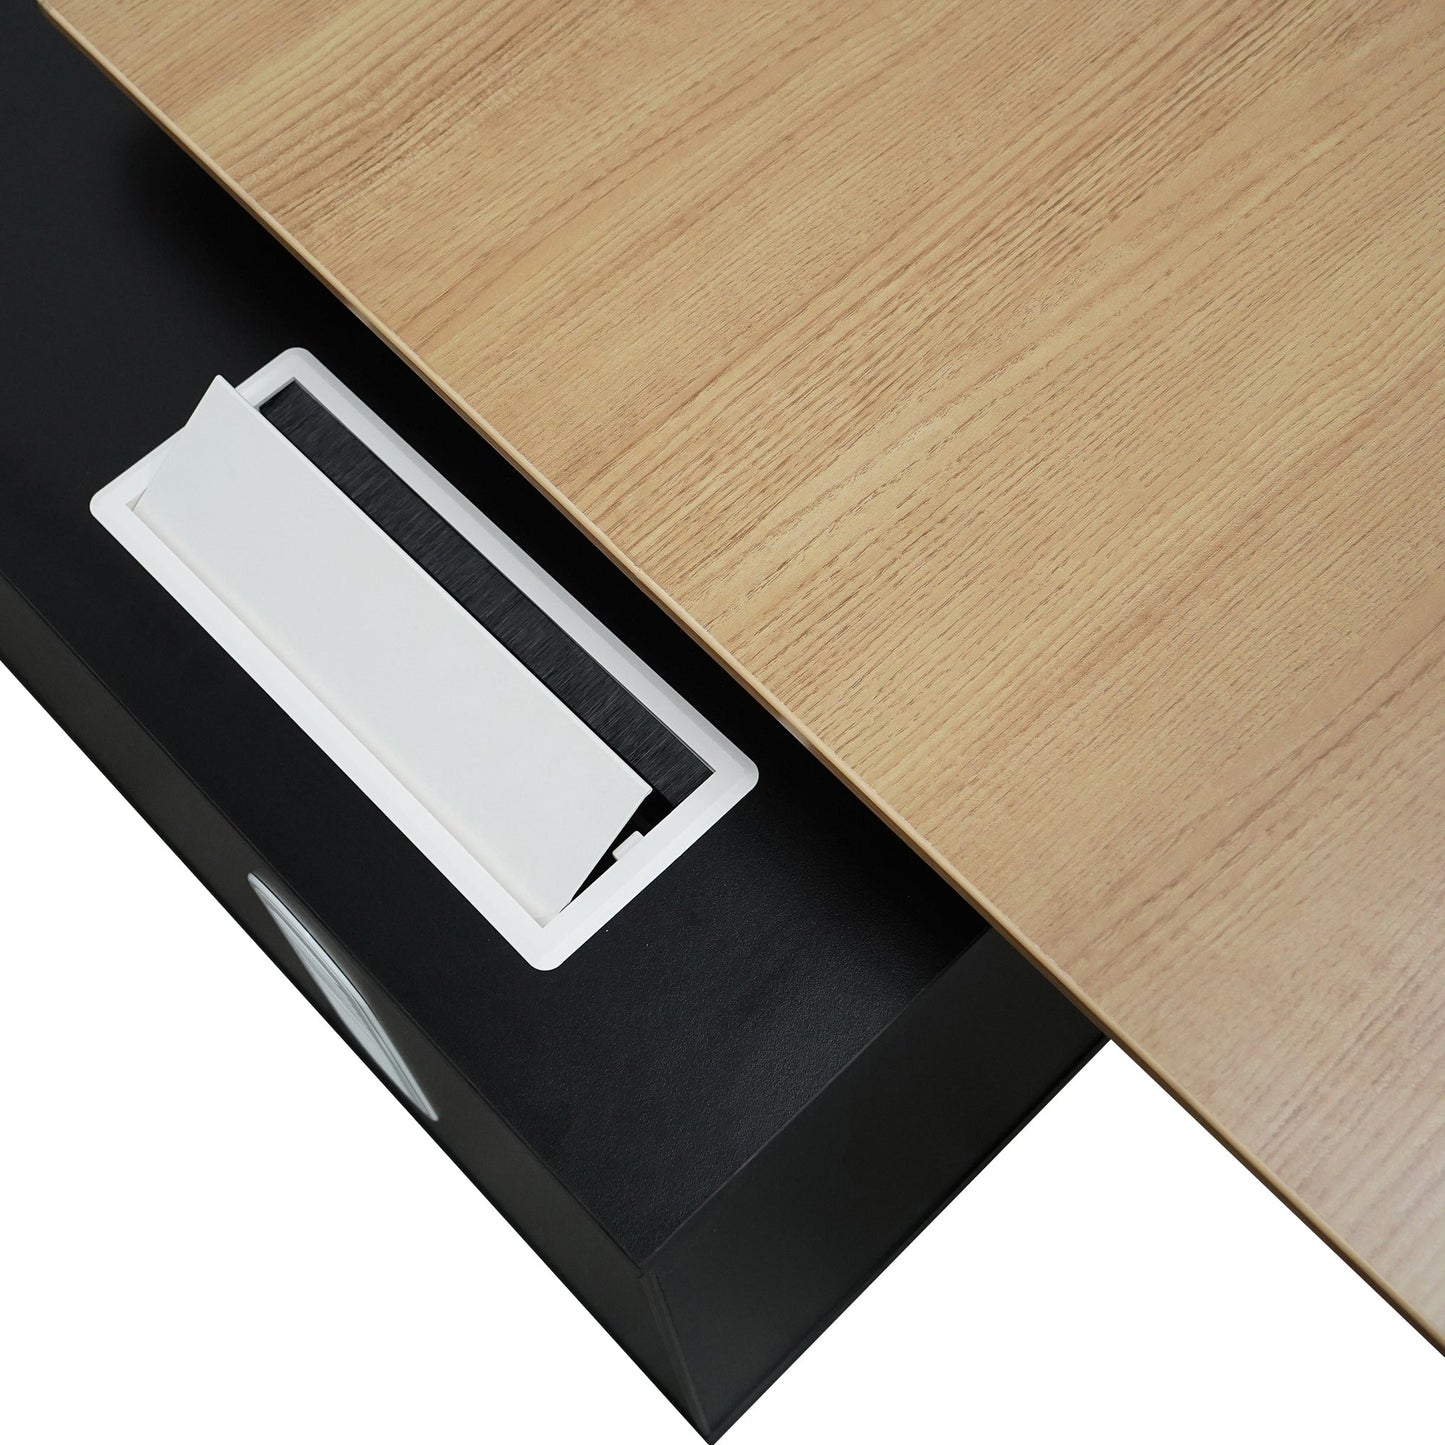 1.95m Executive Desk Right Return - Black Frame with Natural Top and Drawers-Desk-Calibre-Prime Furniture